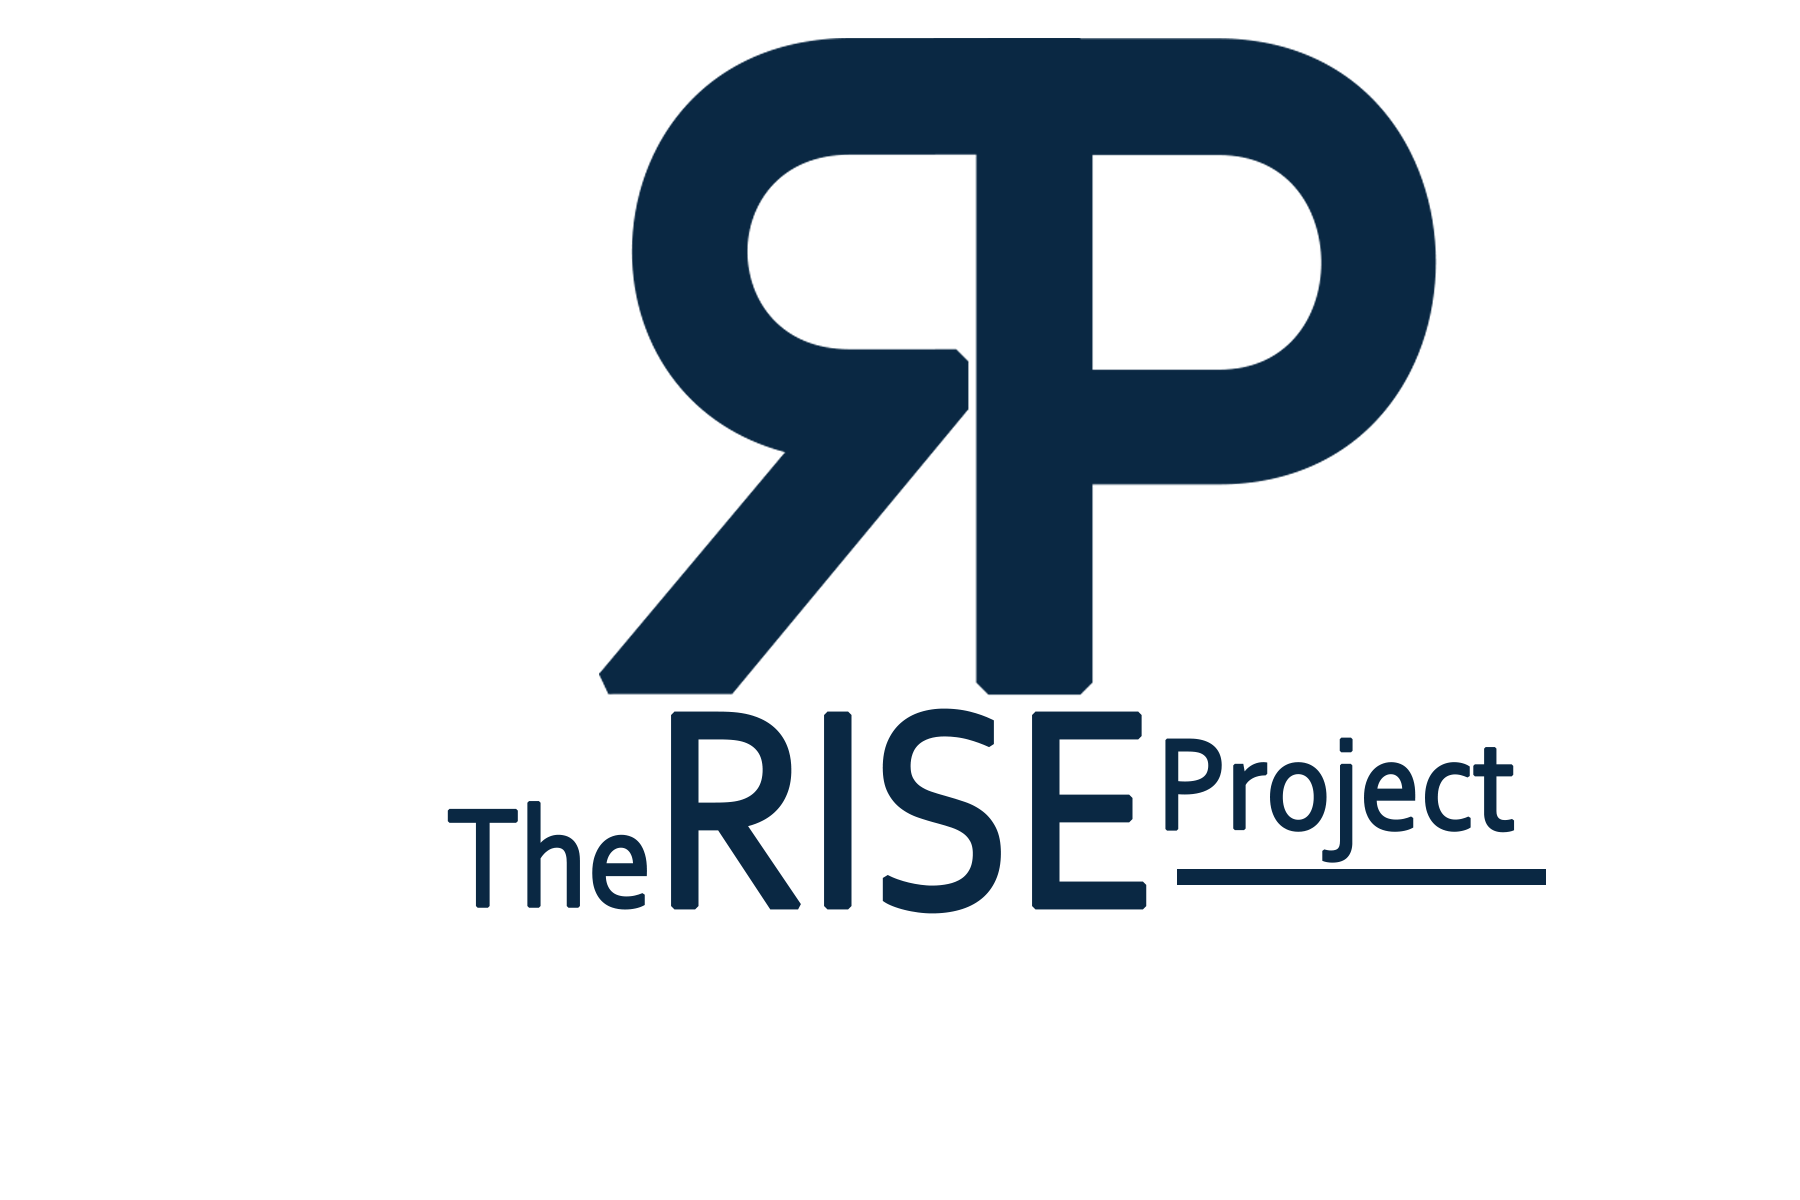 The RISE Project Wharton logo